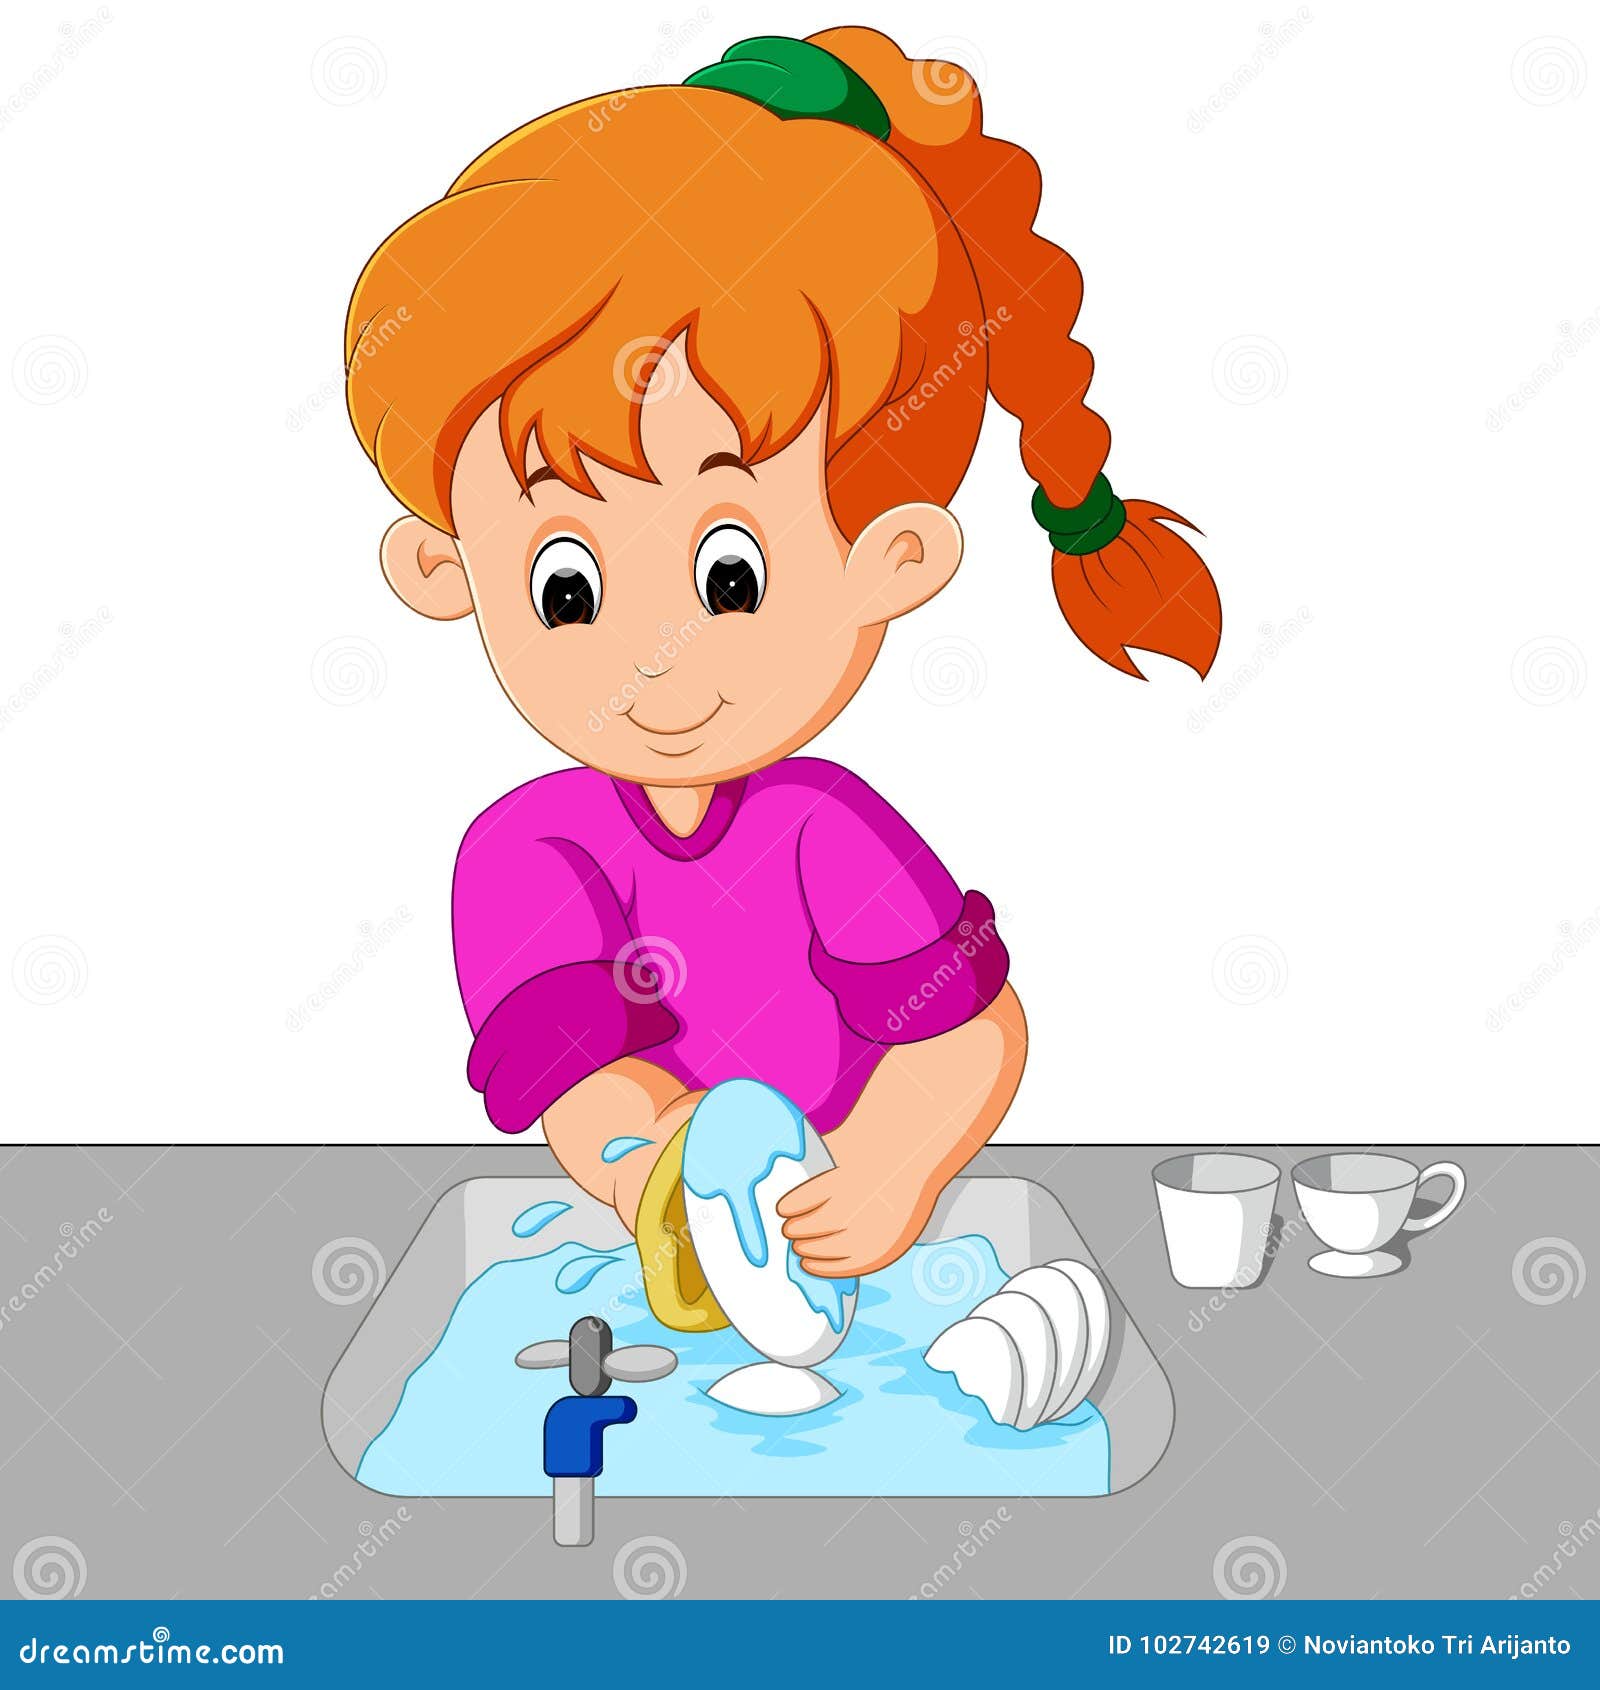 https://thumbs.dreamstime.com/z/illustration-girl-washing-dishes-girl-washing-dishes-102742619.jpg